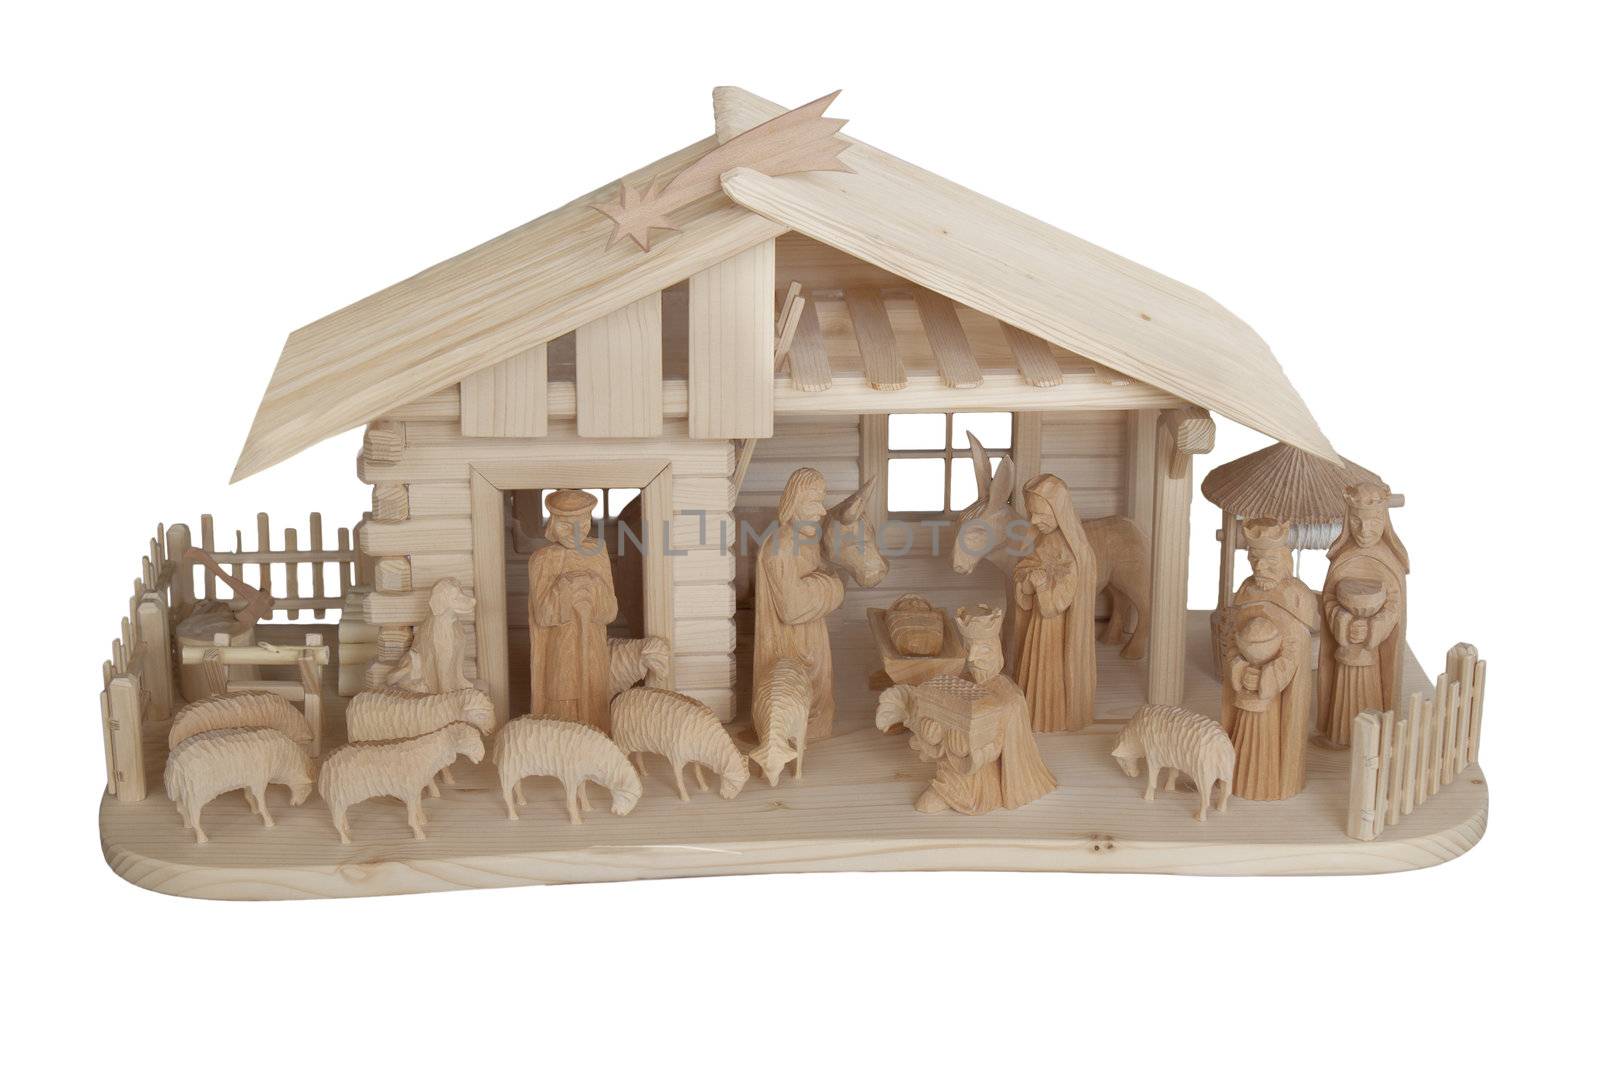 Nativity Scene made of wood, isolated on white